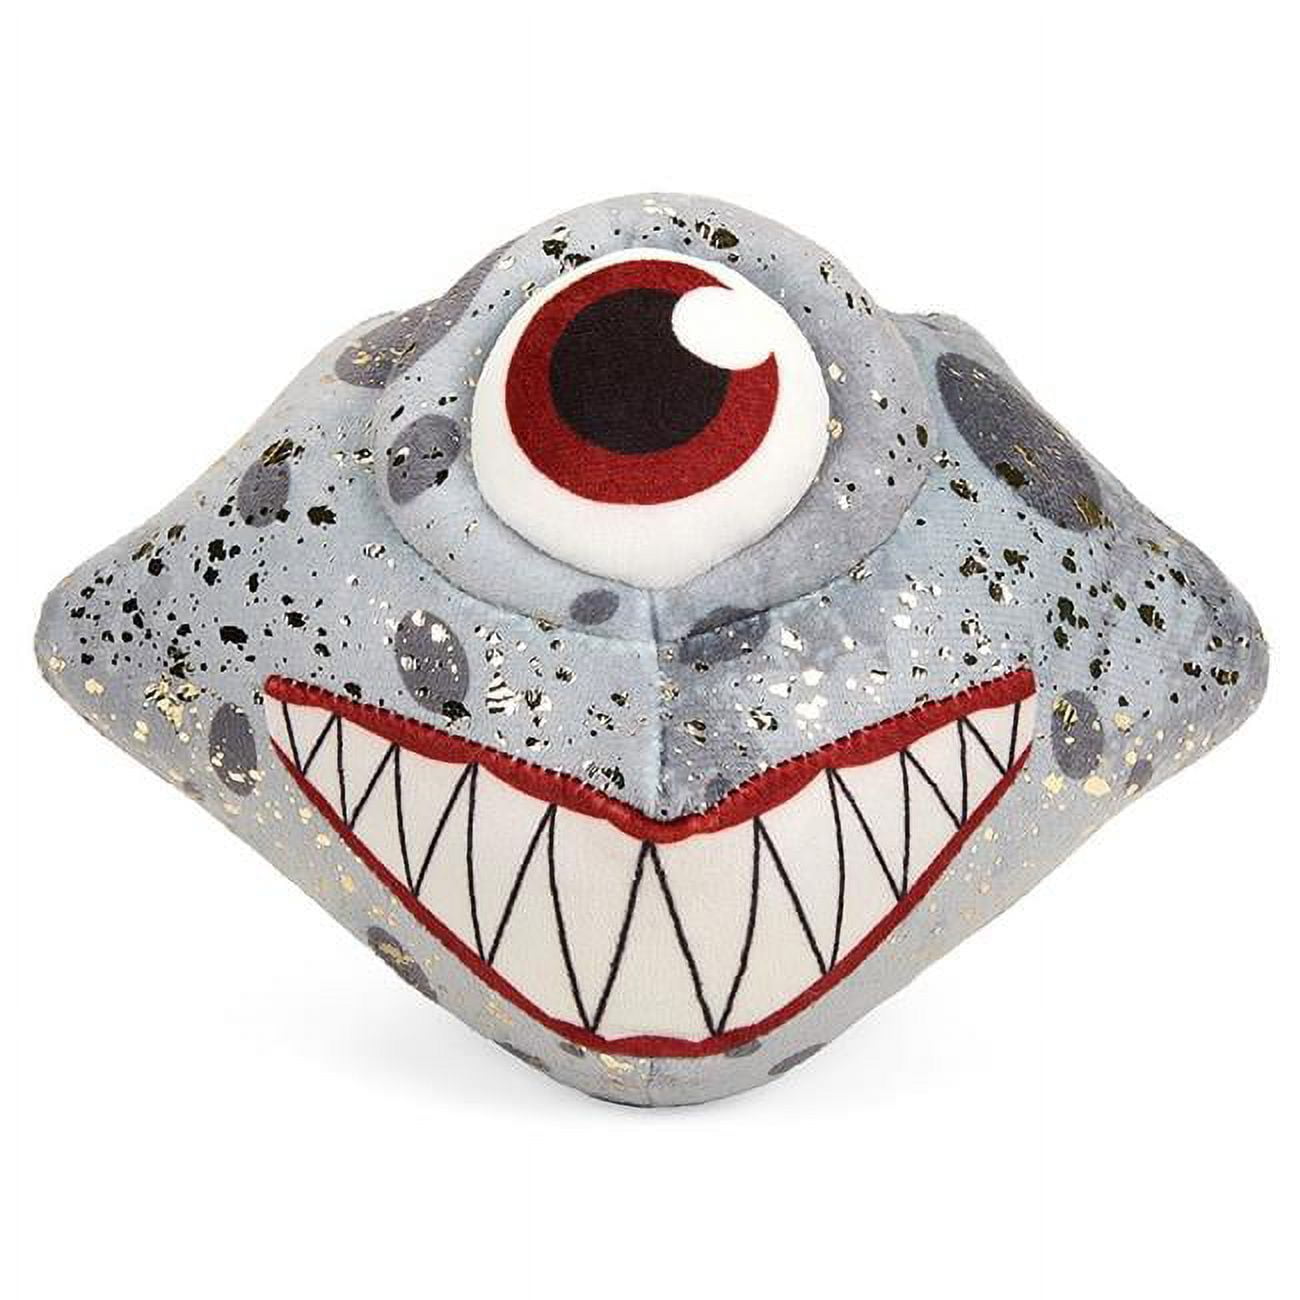 Picture of Kidrobot KR68332 Dungeons & Dragons Eye Monger Phunny Plush Toy